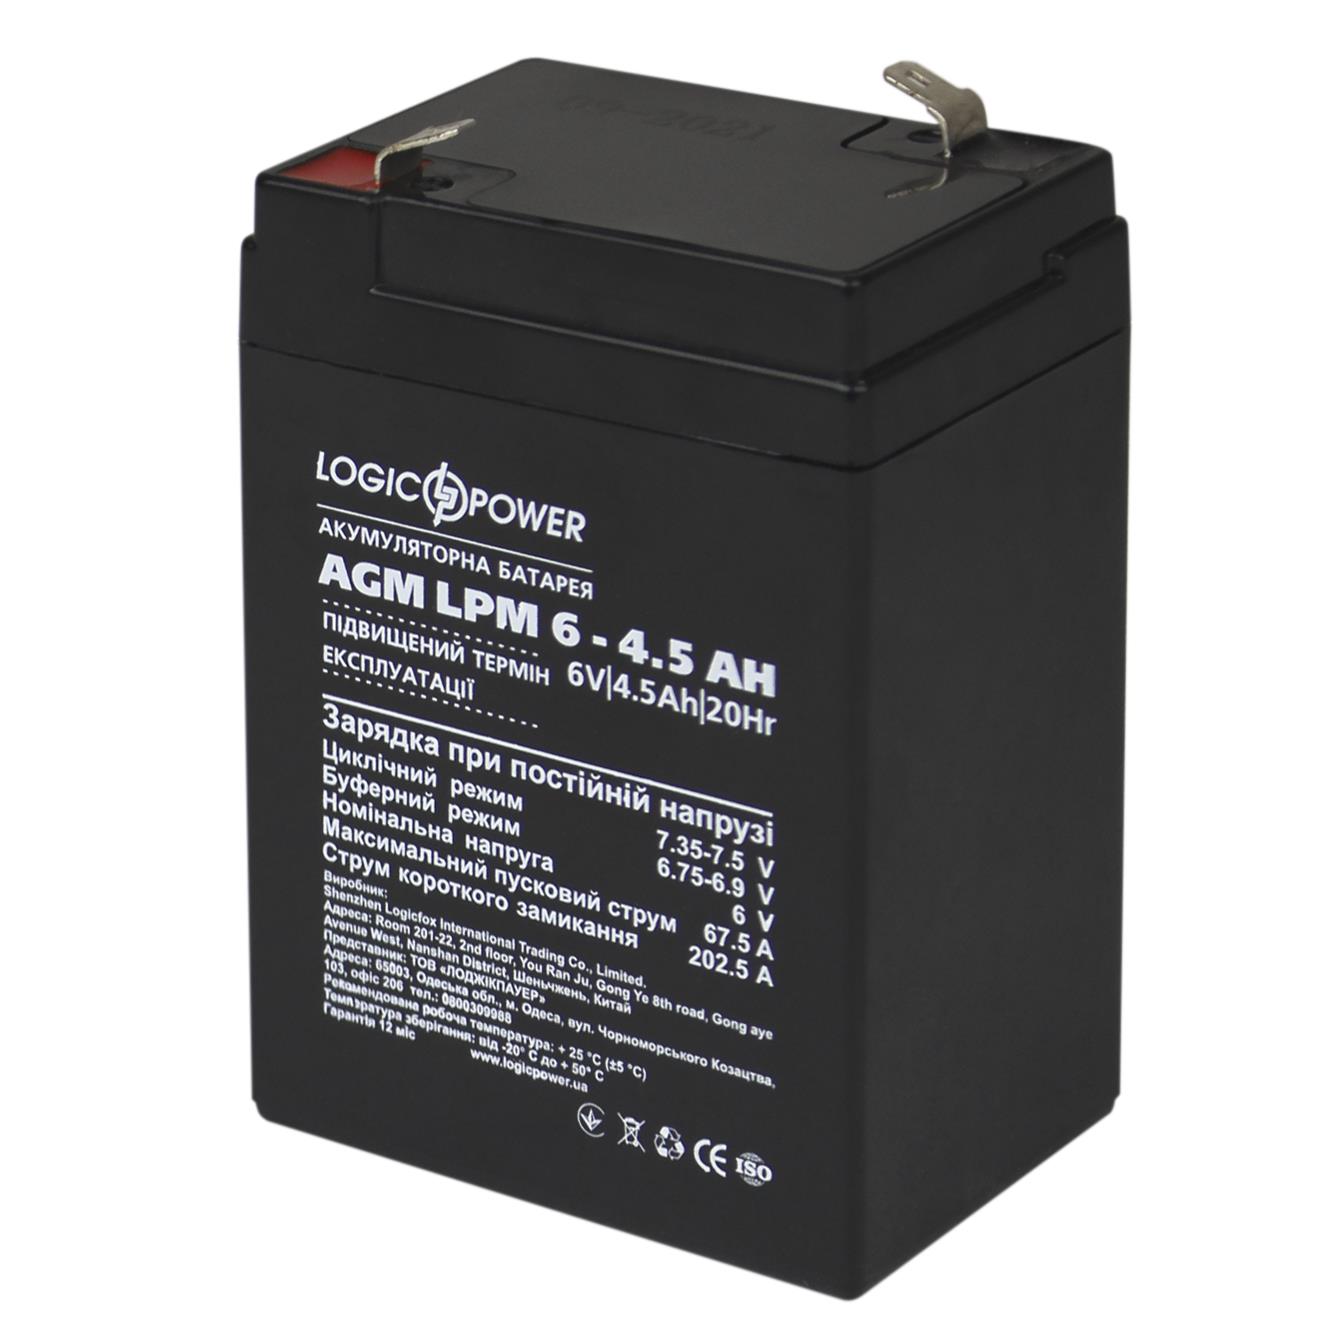 Характеристики аккумулятор свинцово-кислотный LogicPower AGM LPM 6V - 4.5 Ah (3860)